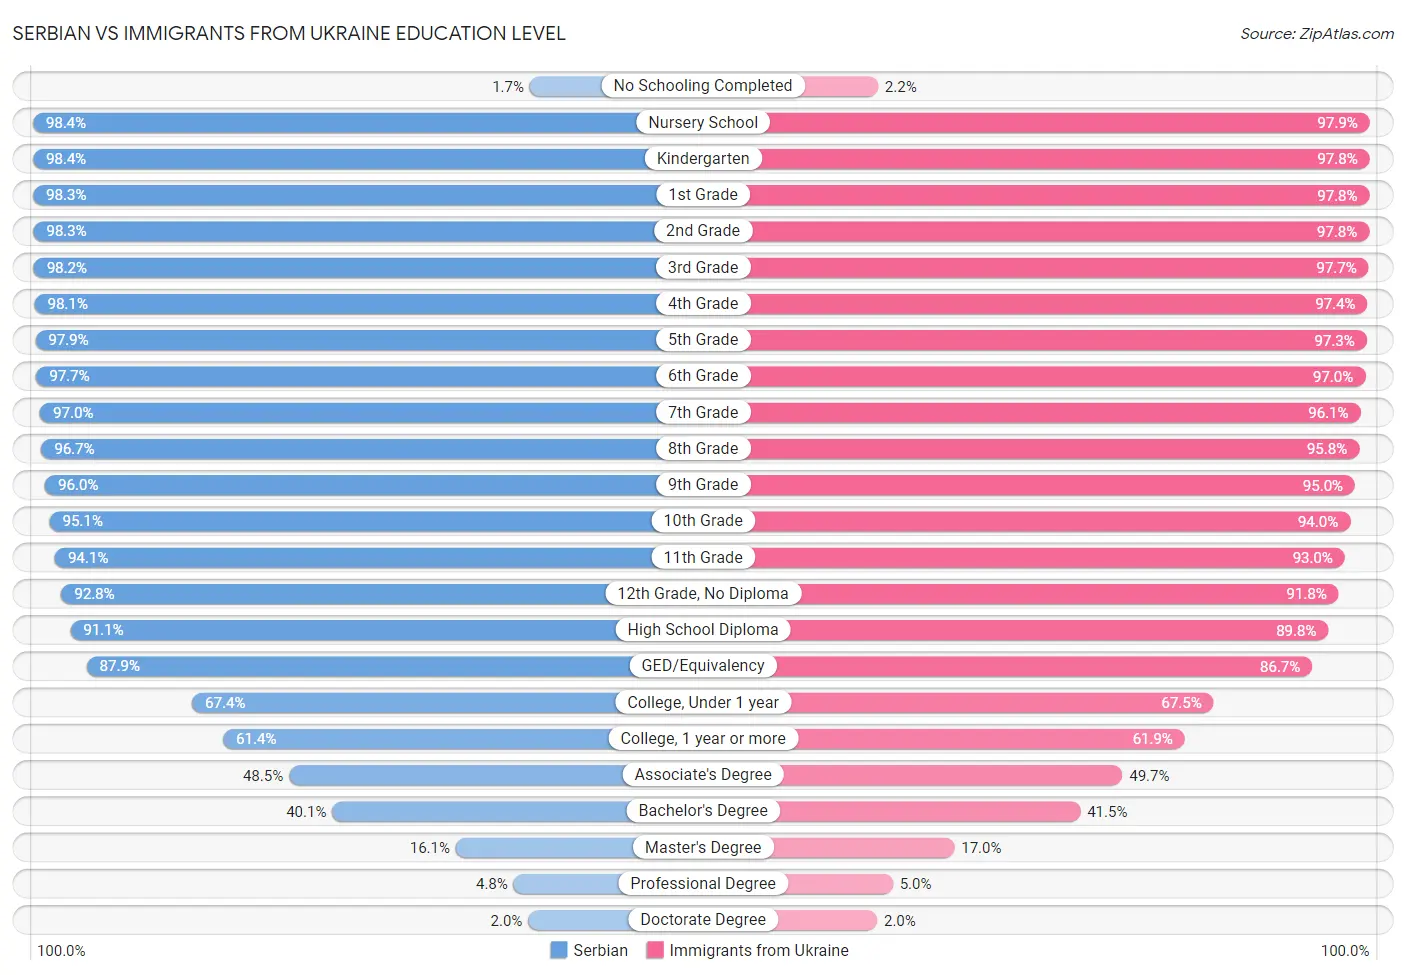 Serbian vs Immigrants from Ukraine Education Level